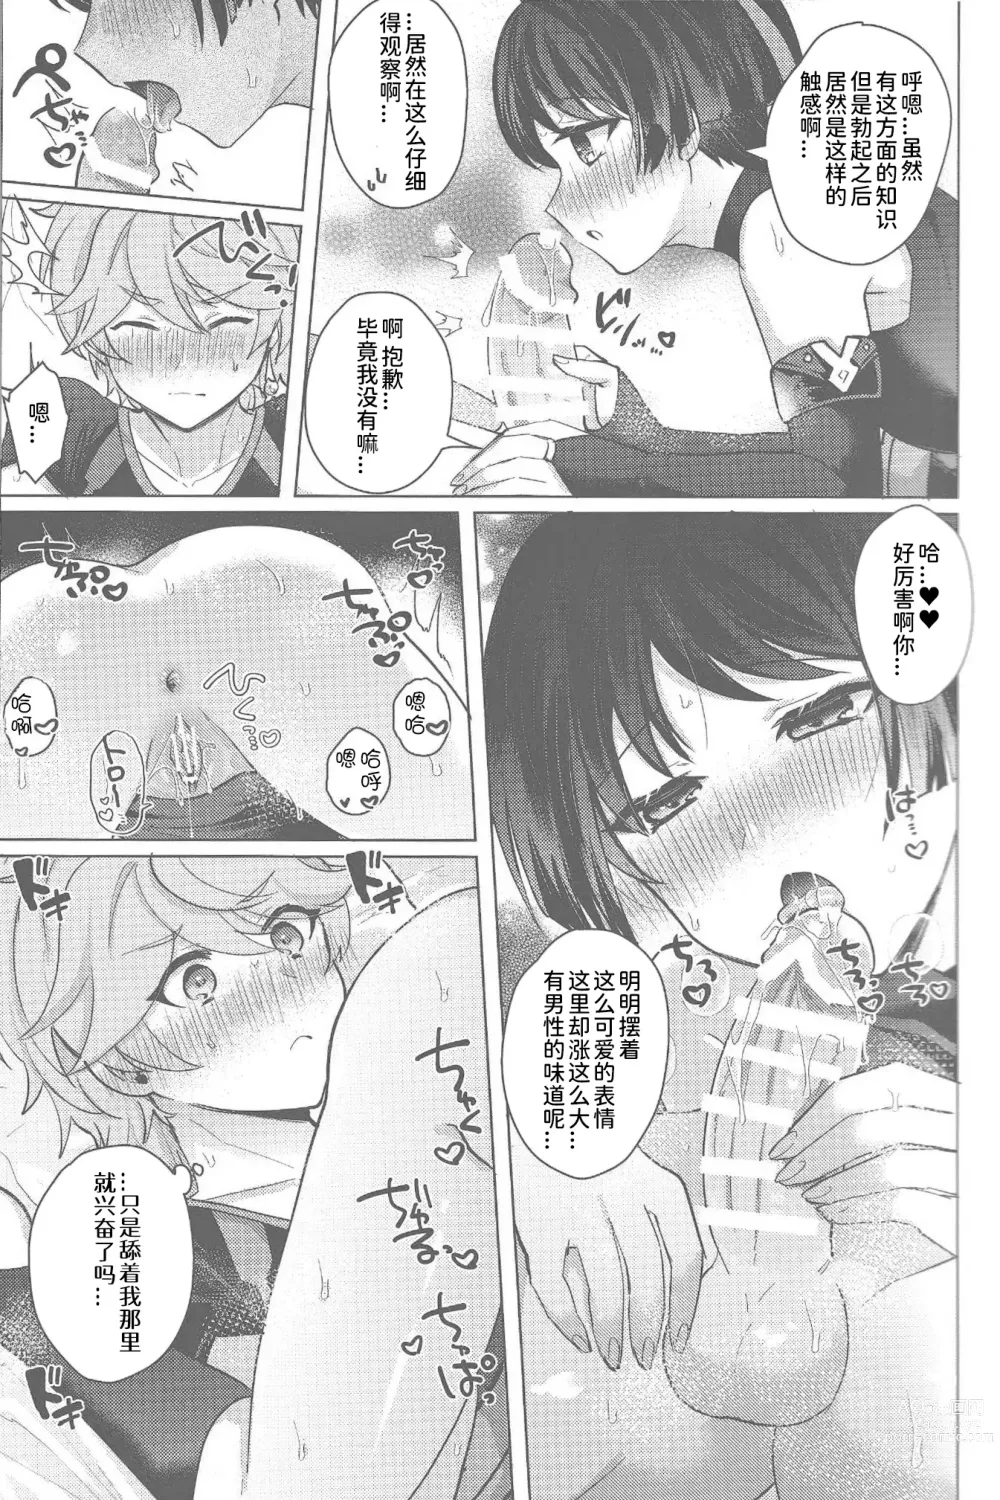 Page 14 of doujinshi 请告诉我那甜蜜的秘密吧